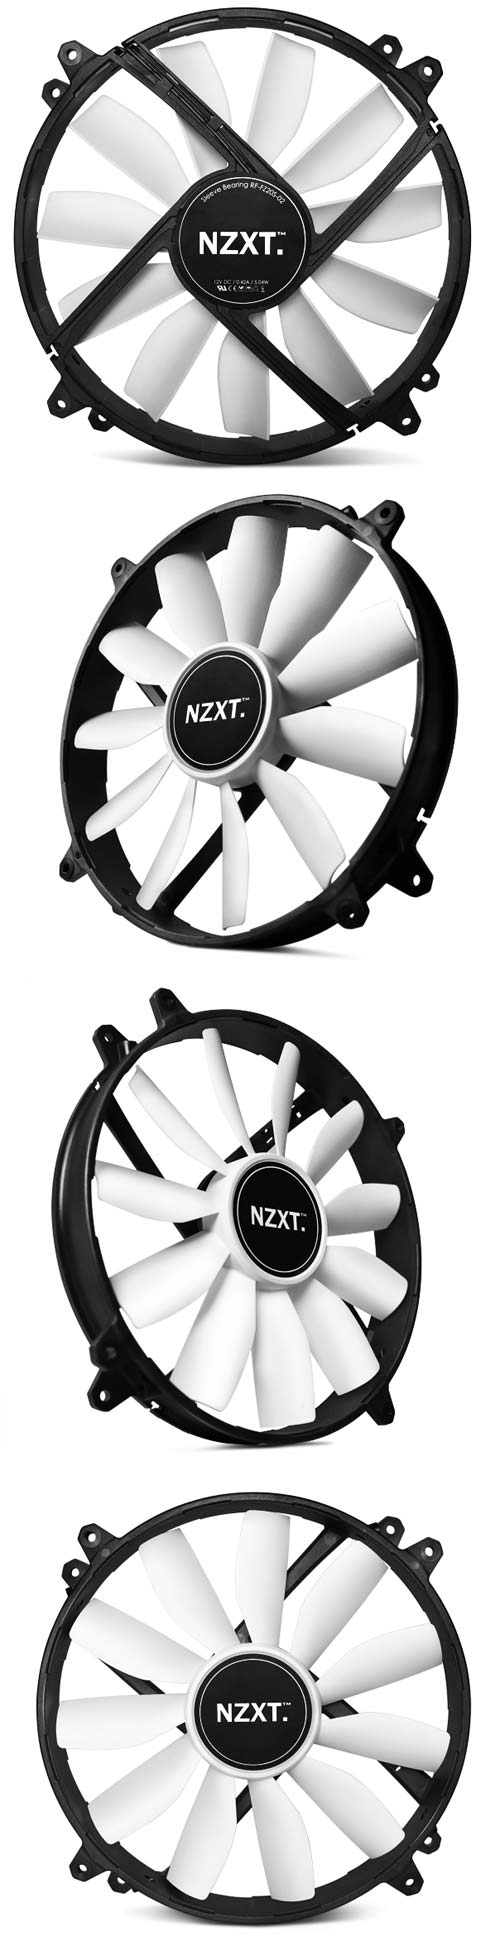 200мм вентиляторы NZXT FZ-200